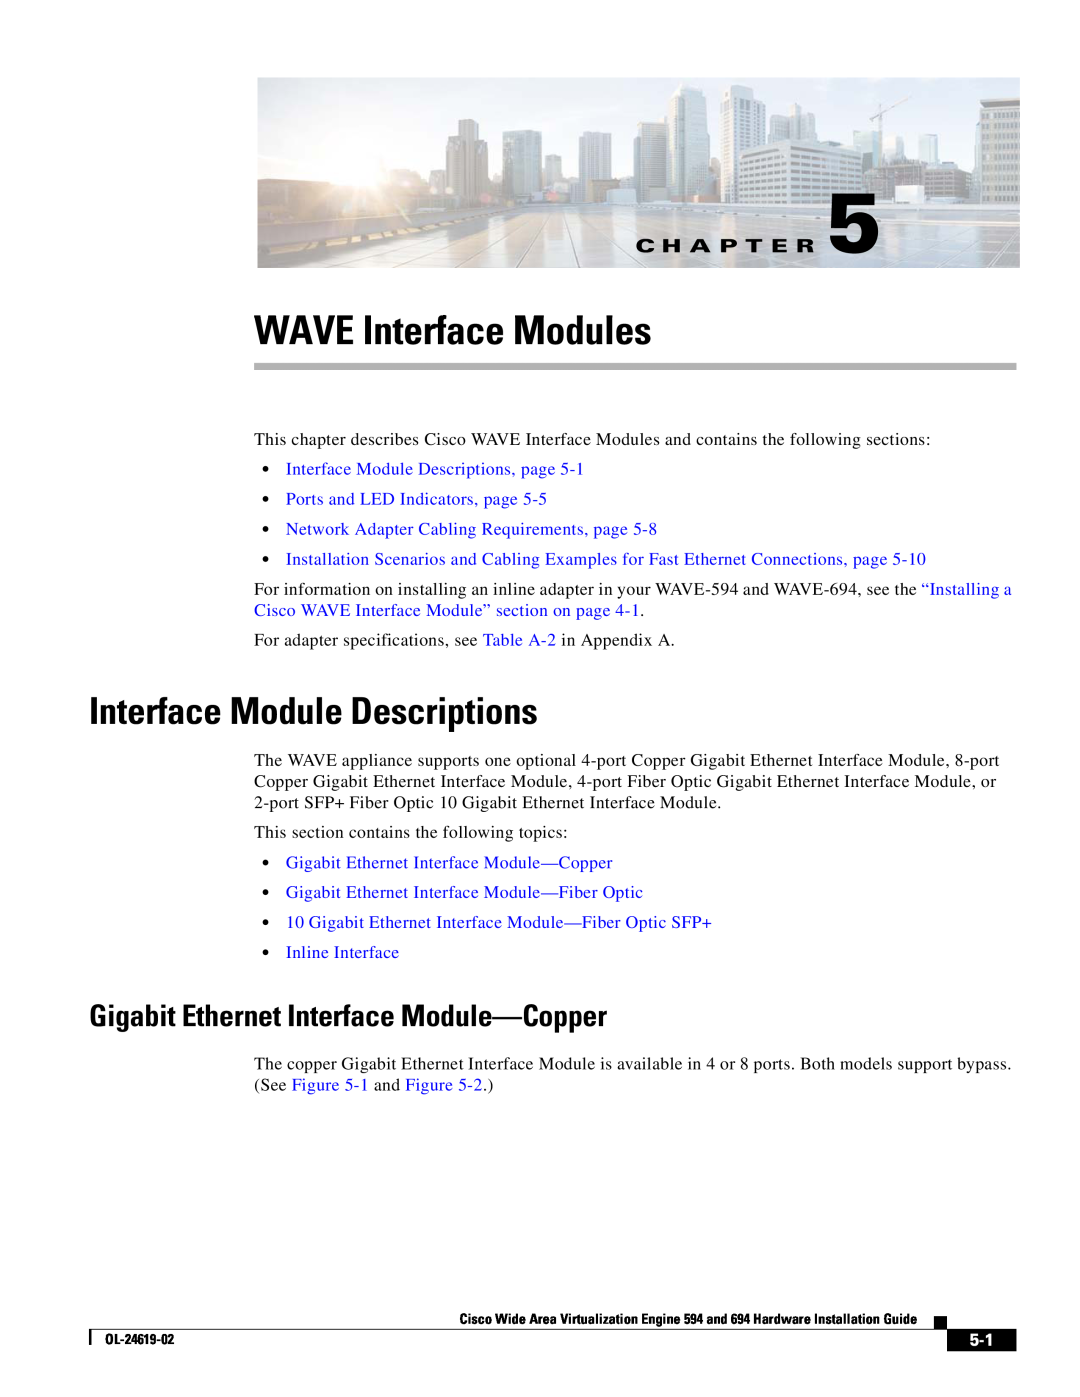 Cisco Systems 694 manual WAVE Interface Modules, Interface Module Descriptions, Gigabit Ethernet Interface Module-Copper 